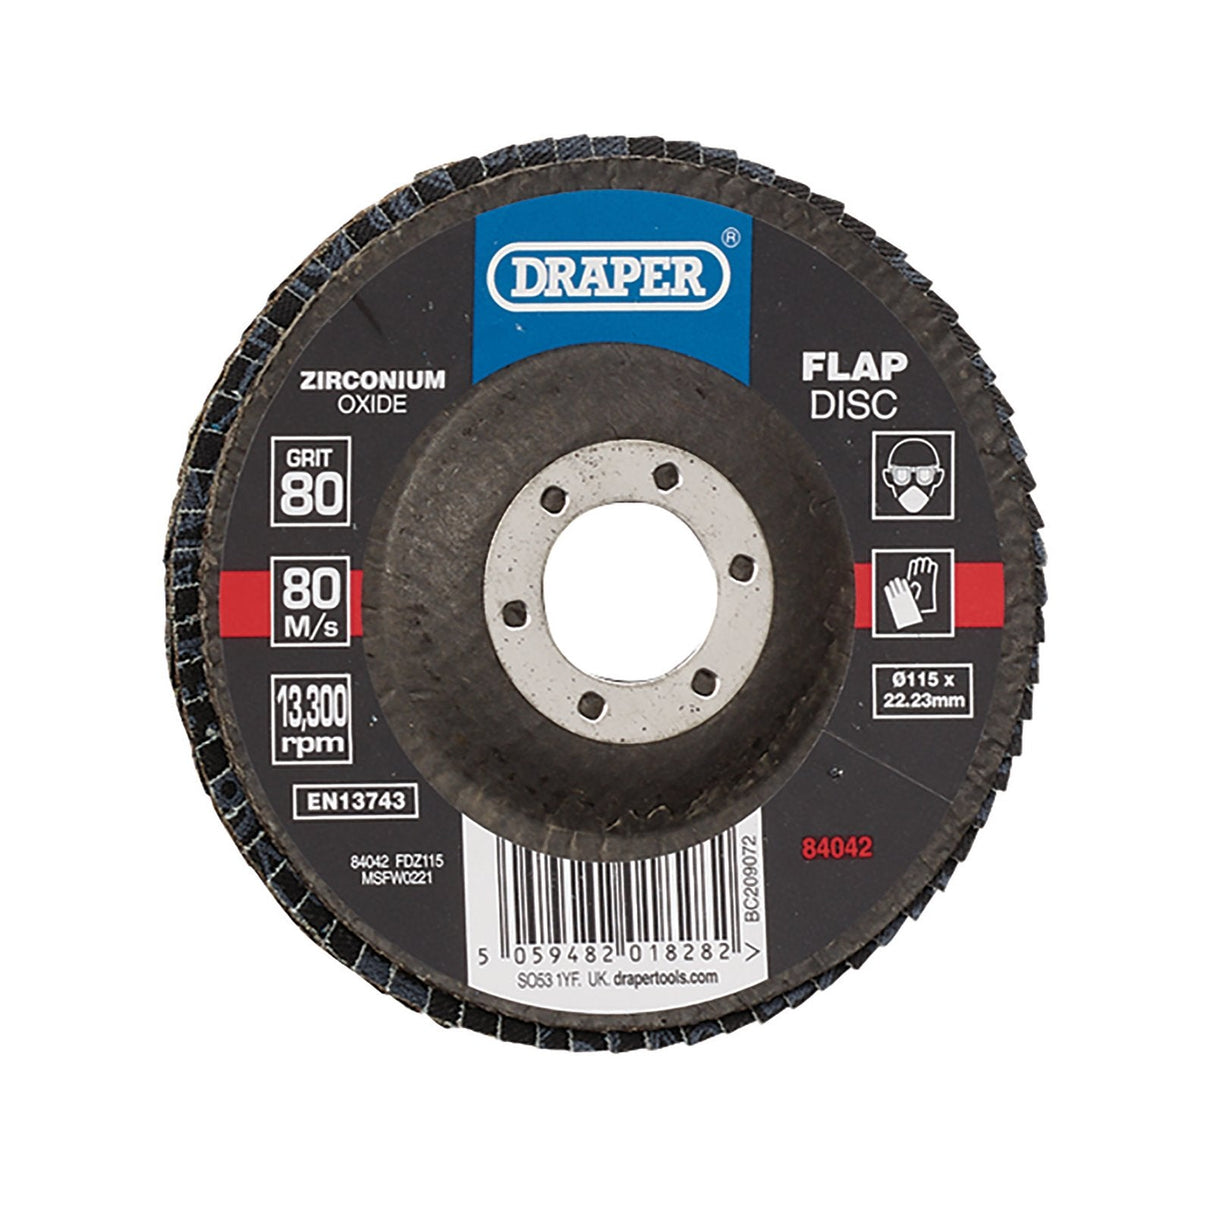 Draper Zirconium Oxide Flap Disc, 115 X 22.23mm, 80 Grit - FDZ115 - Farming Parts